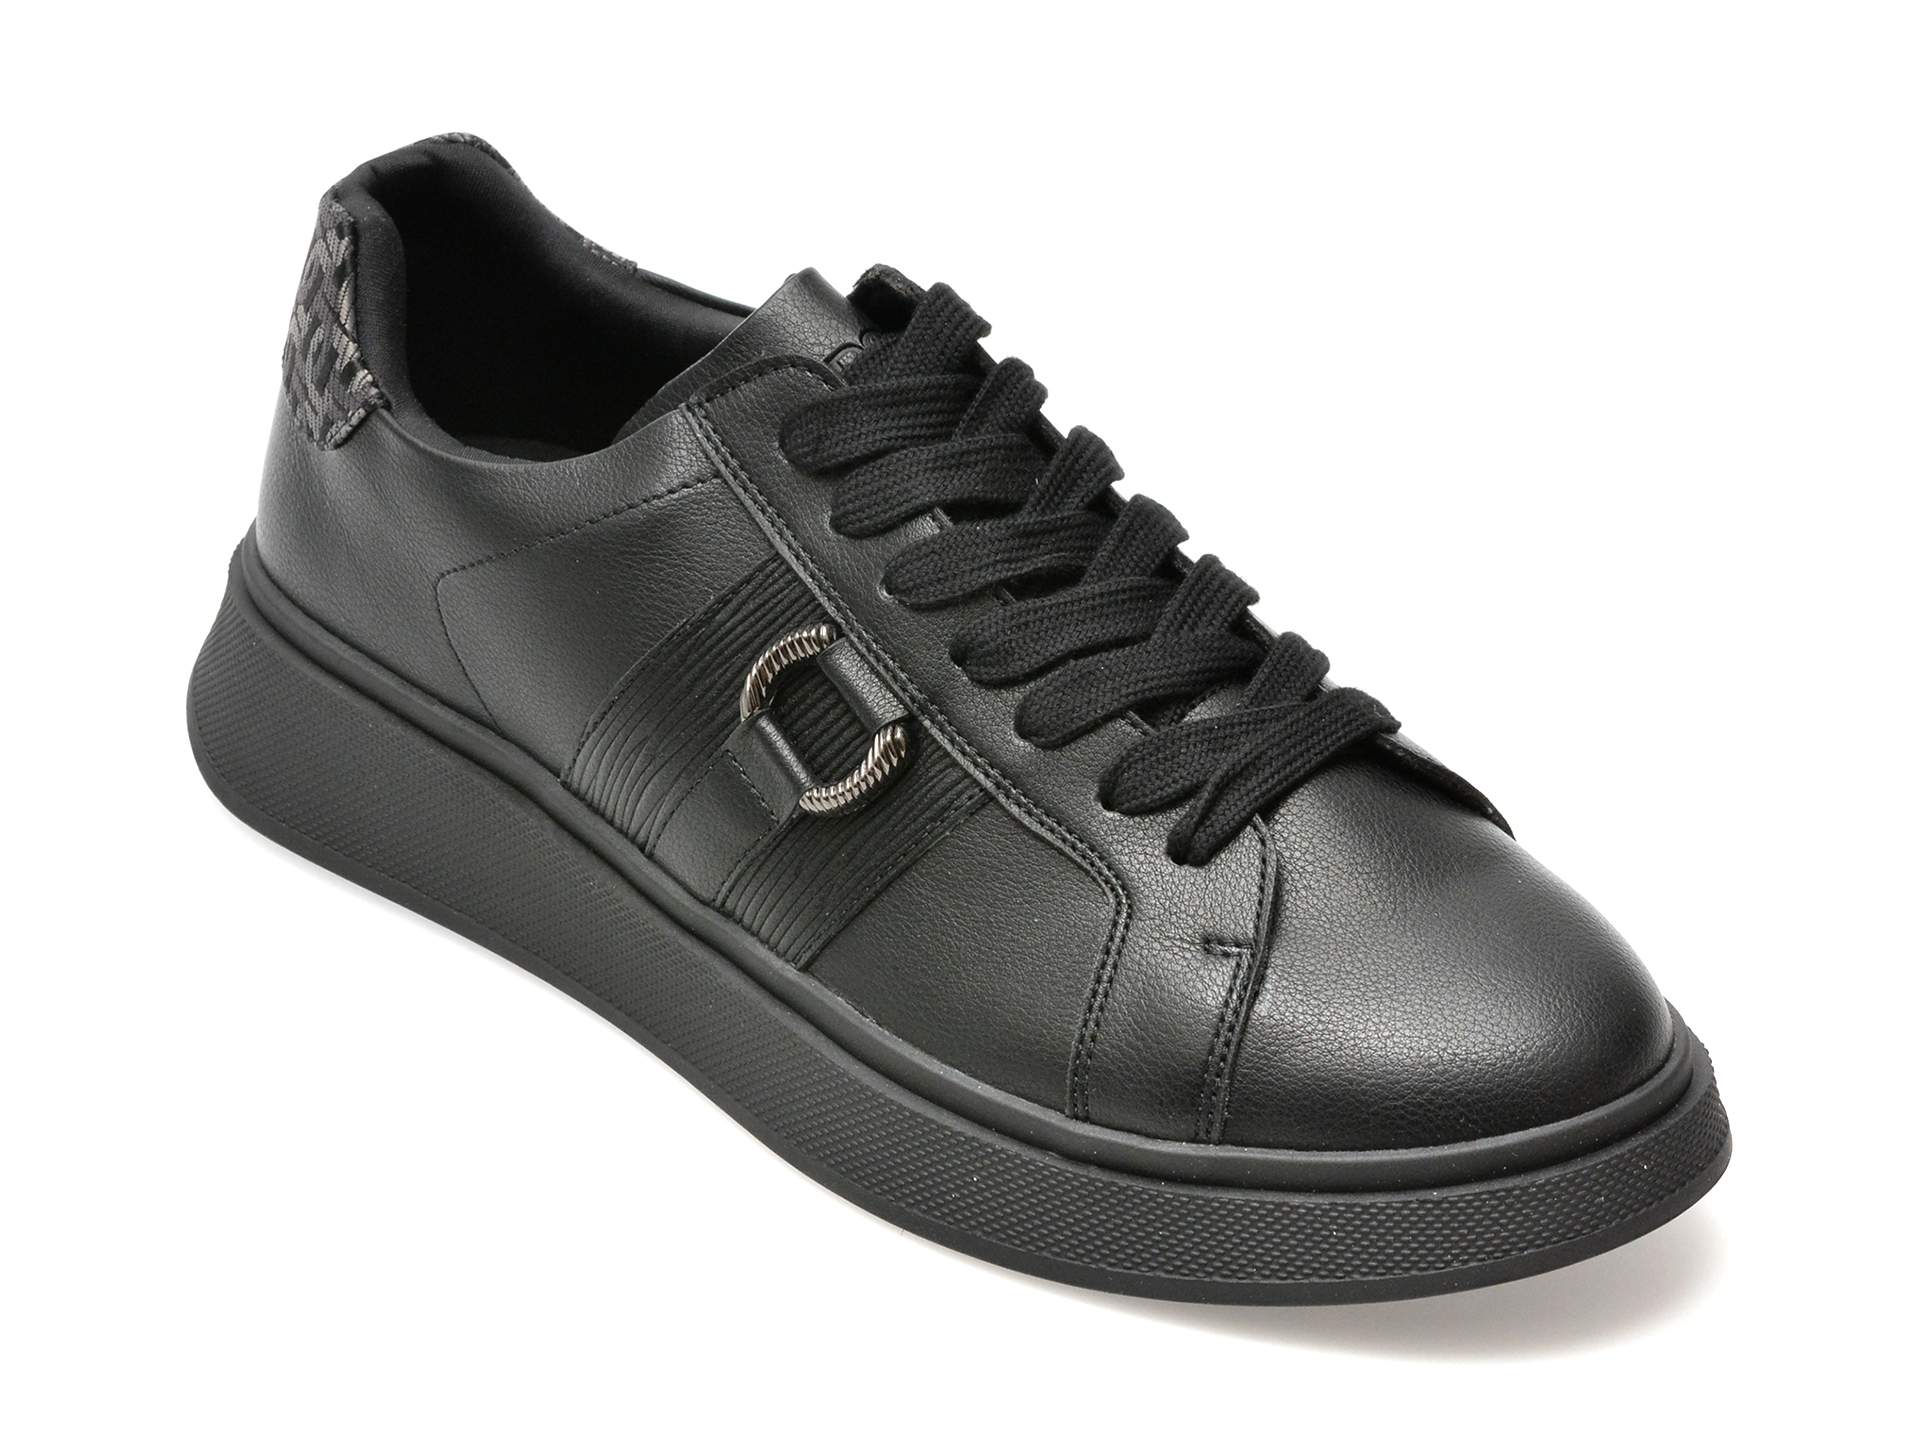 Pantofi ALDO negri, VALDES004, din piele ecologica